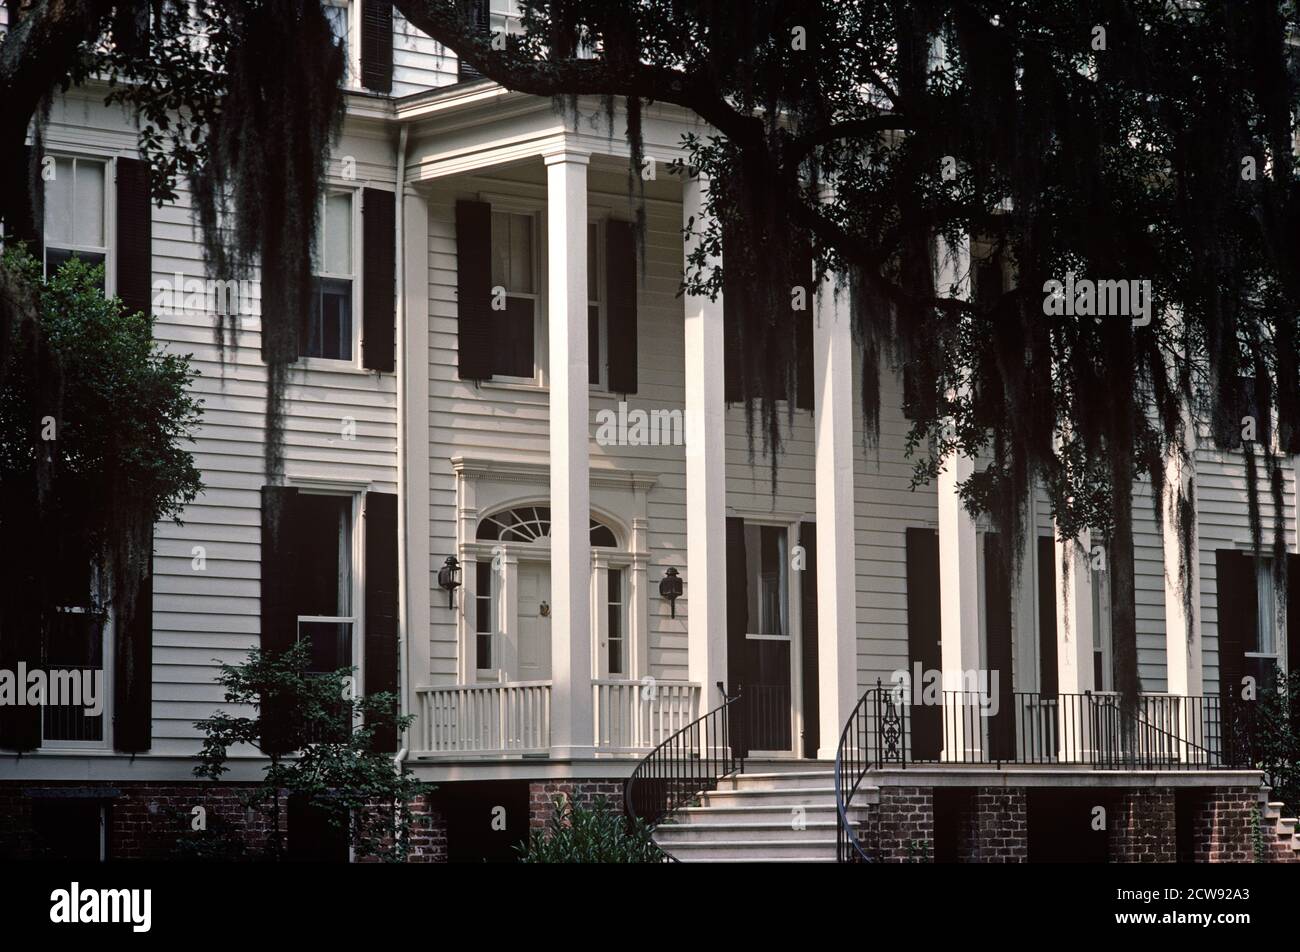 GRAND SOUTHERN STYLE HOUSE IN HISTORIC SAVANNAH, GEORGIA, USA, 1980s Stock Photo